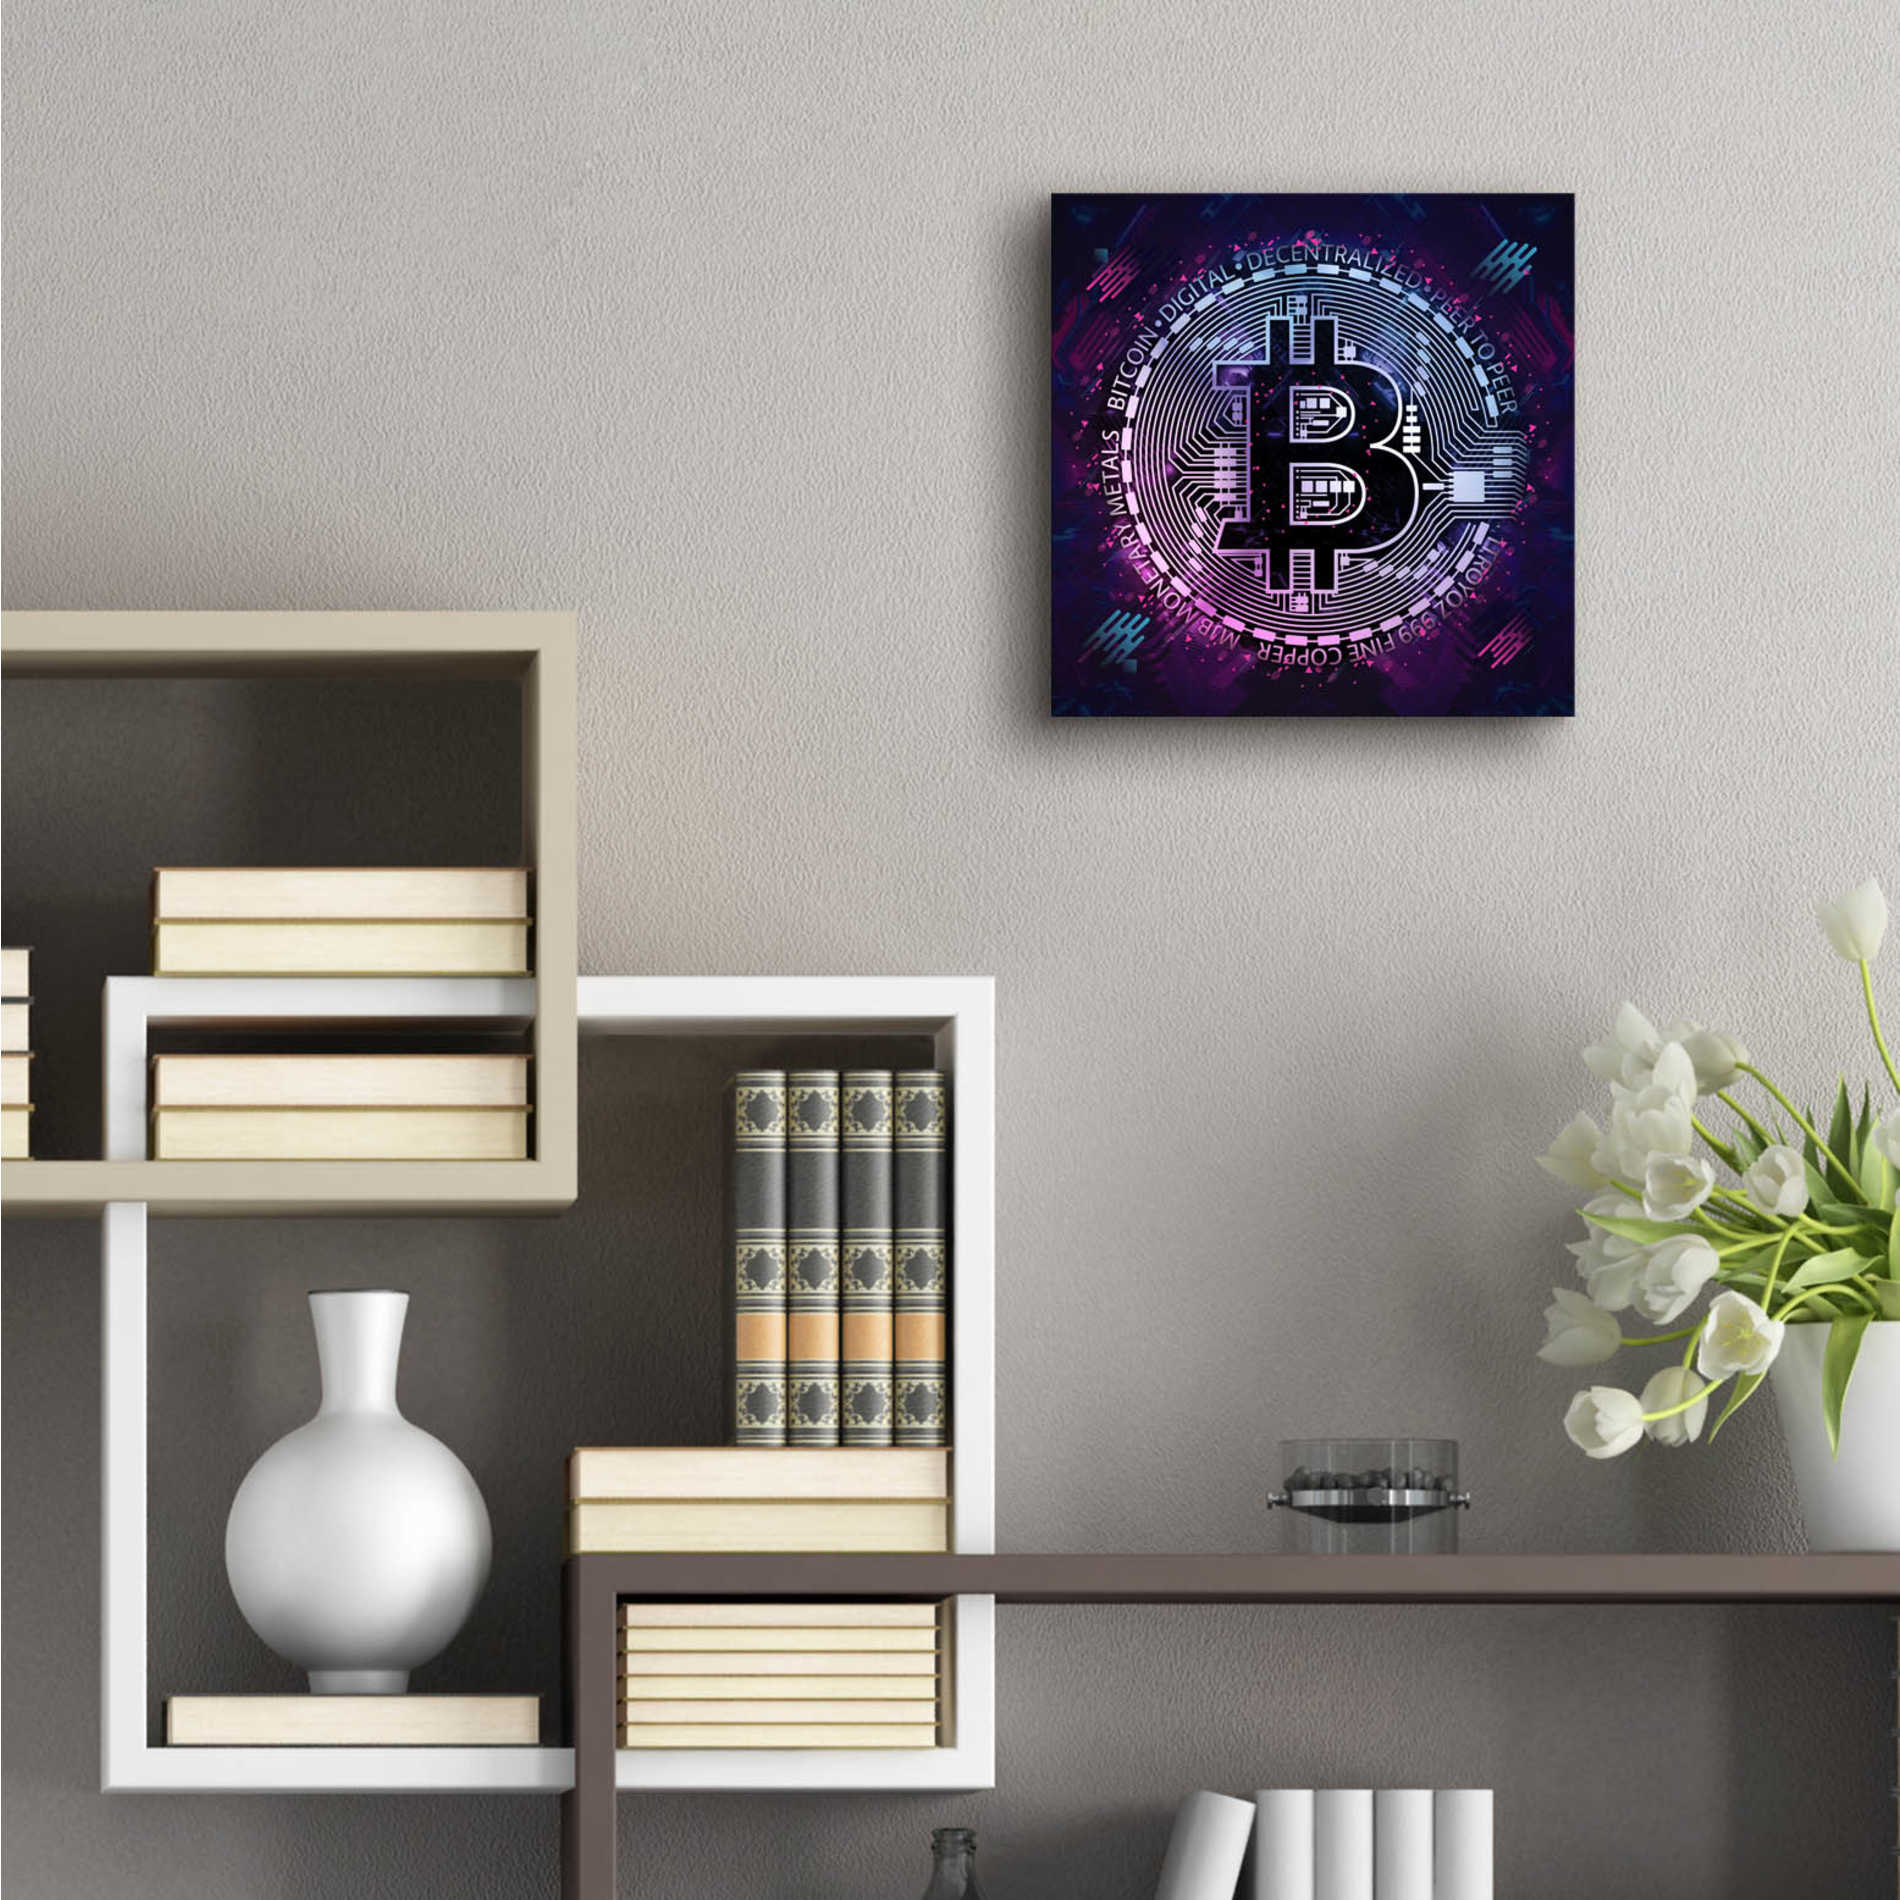 Epic Art 'Bitcoin 80s' by Cameron Gray Acrylic Glass Wall Art,12x12